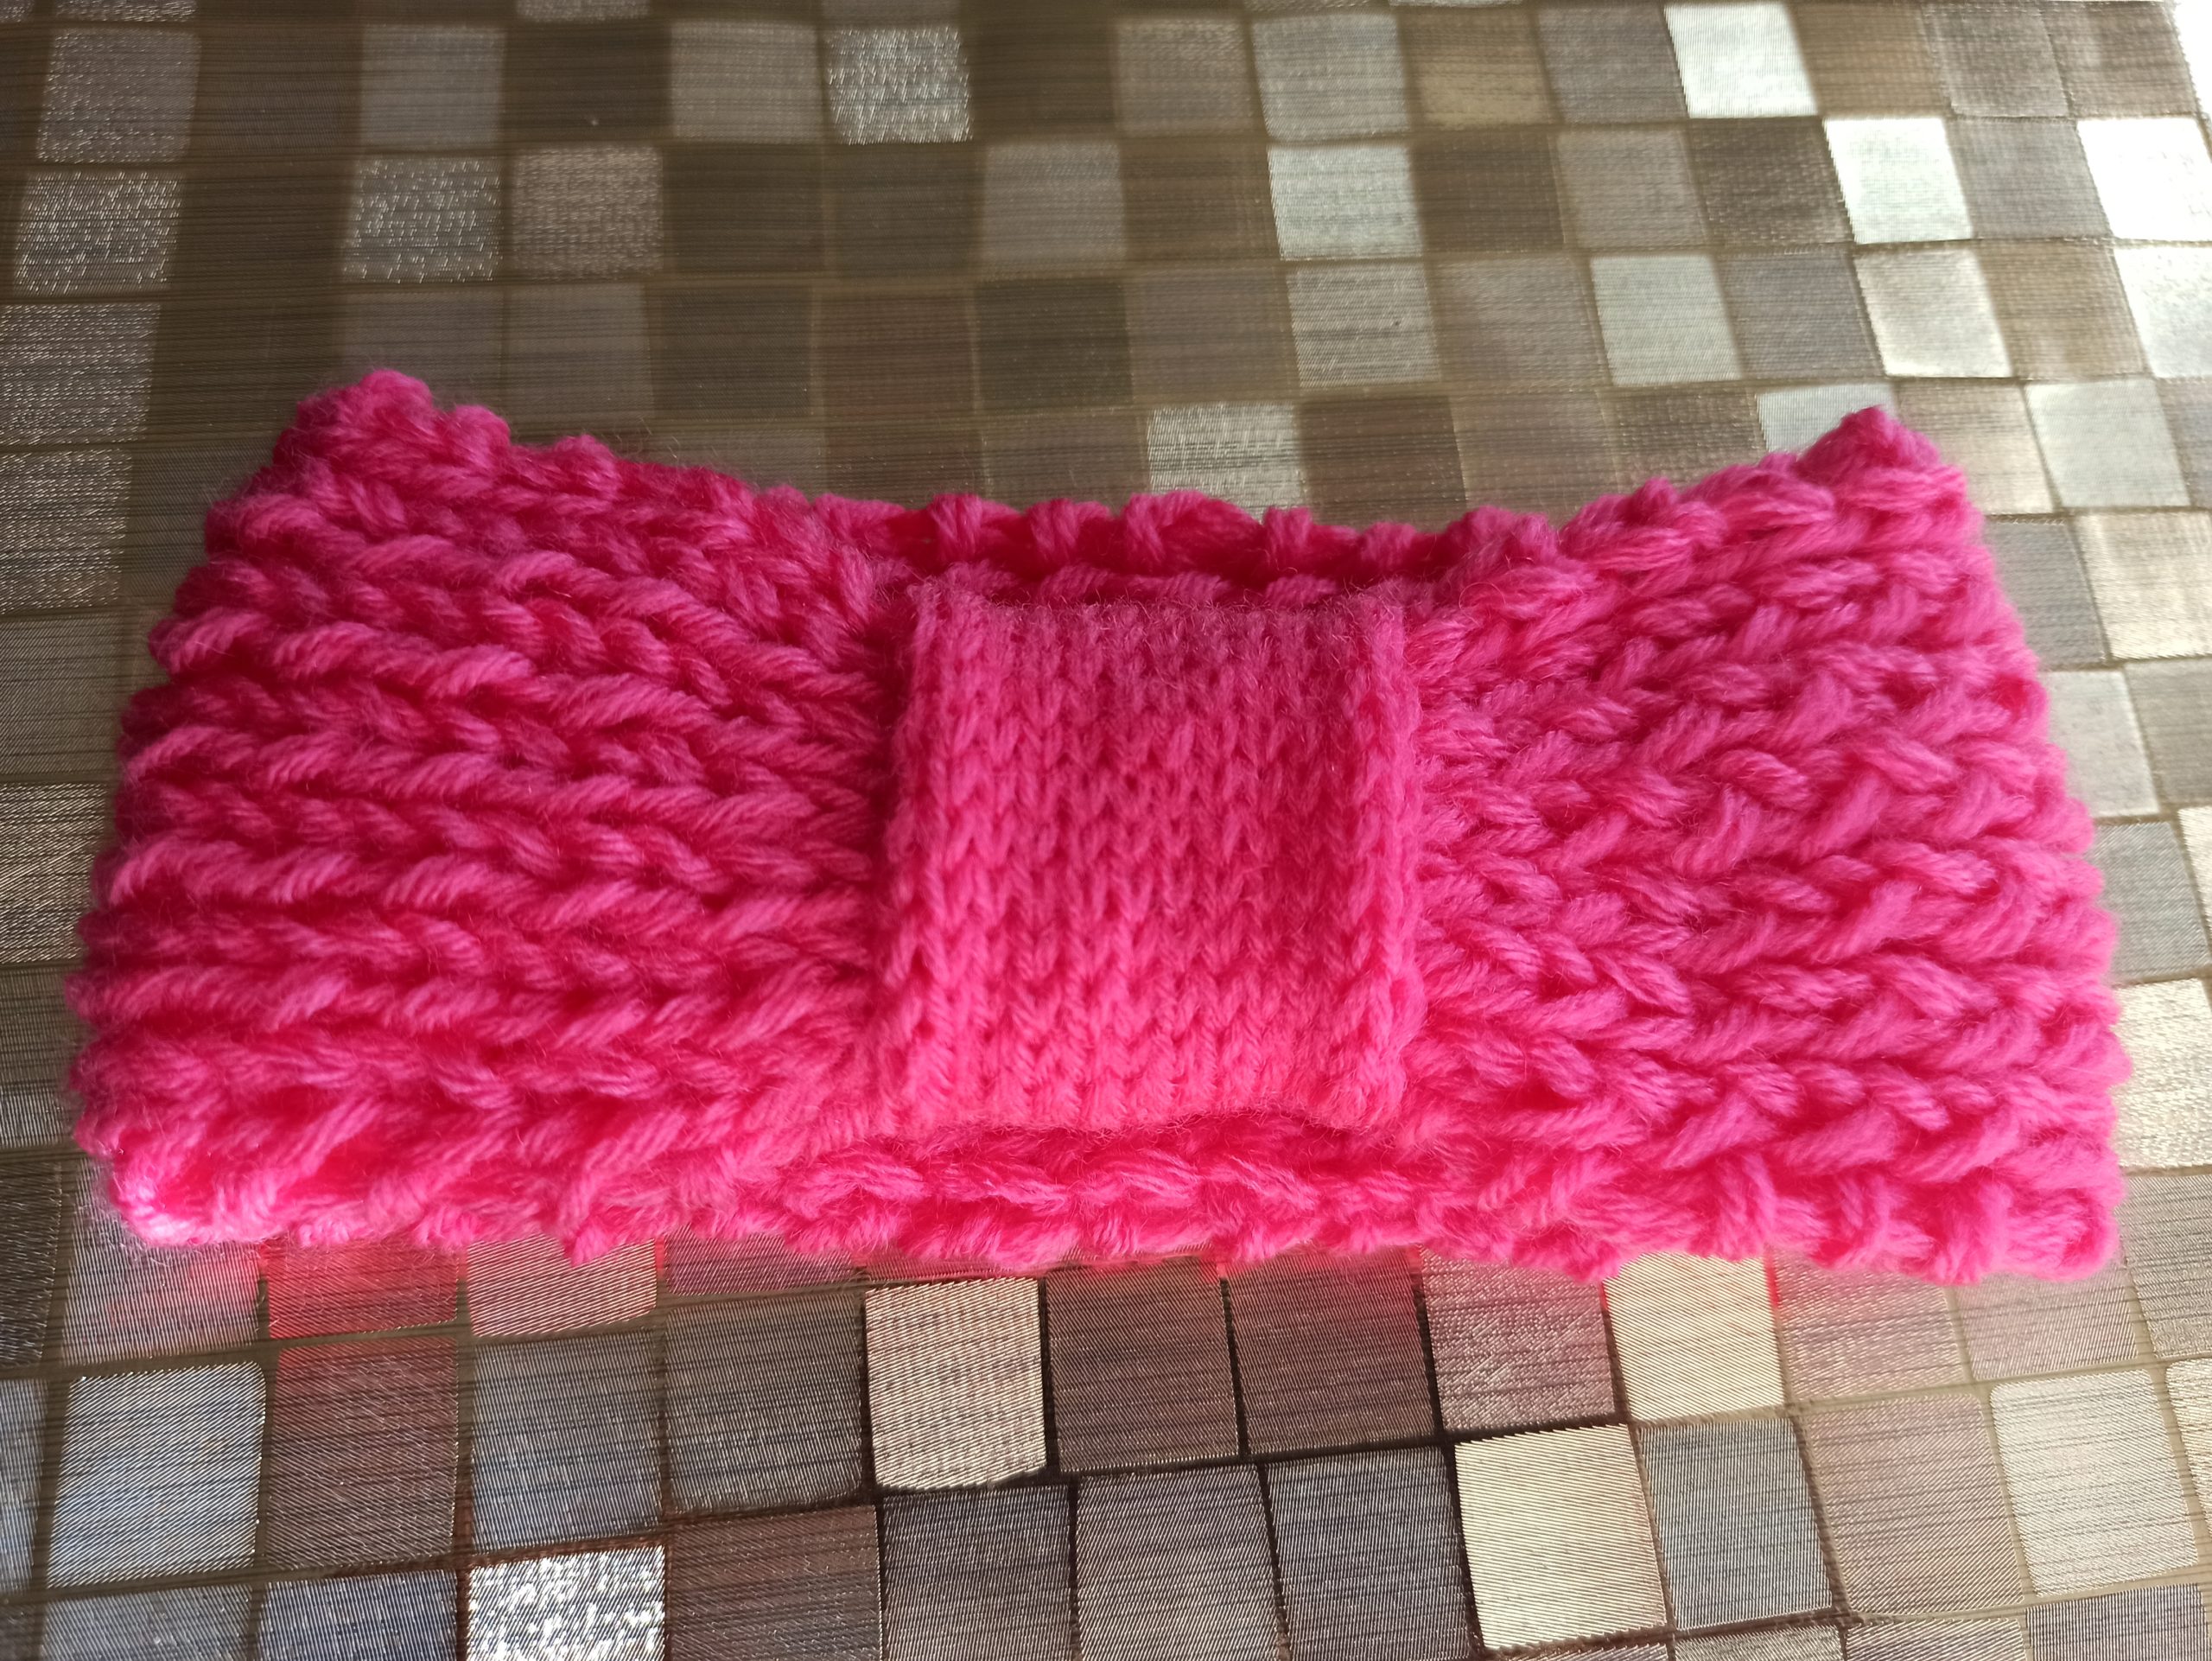 The knit before Christmas - Headband